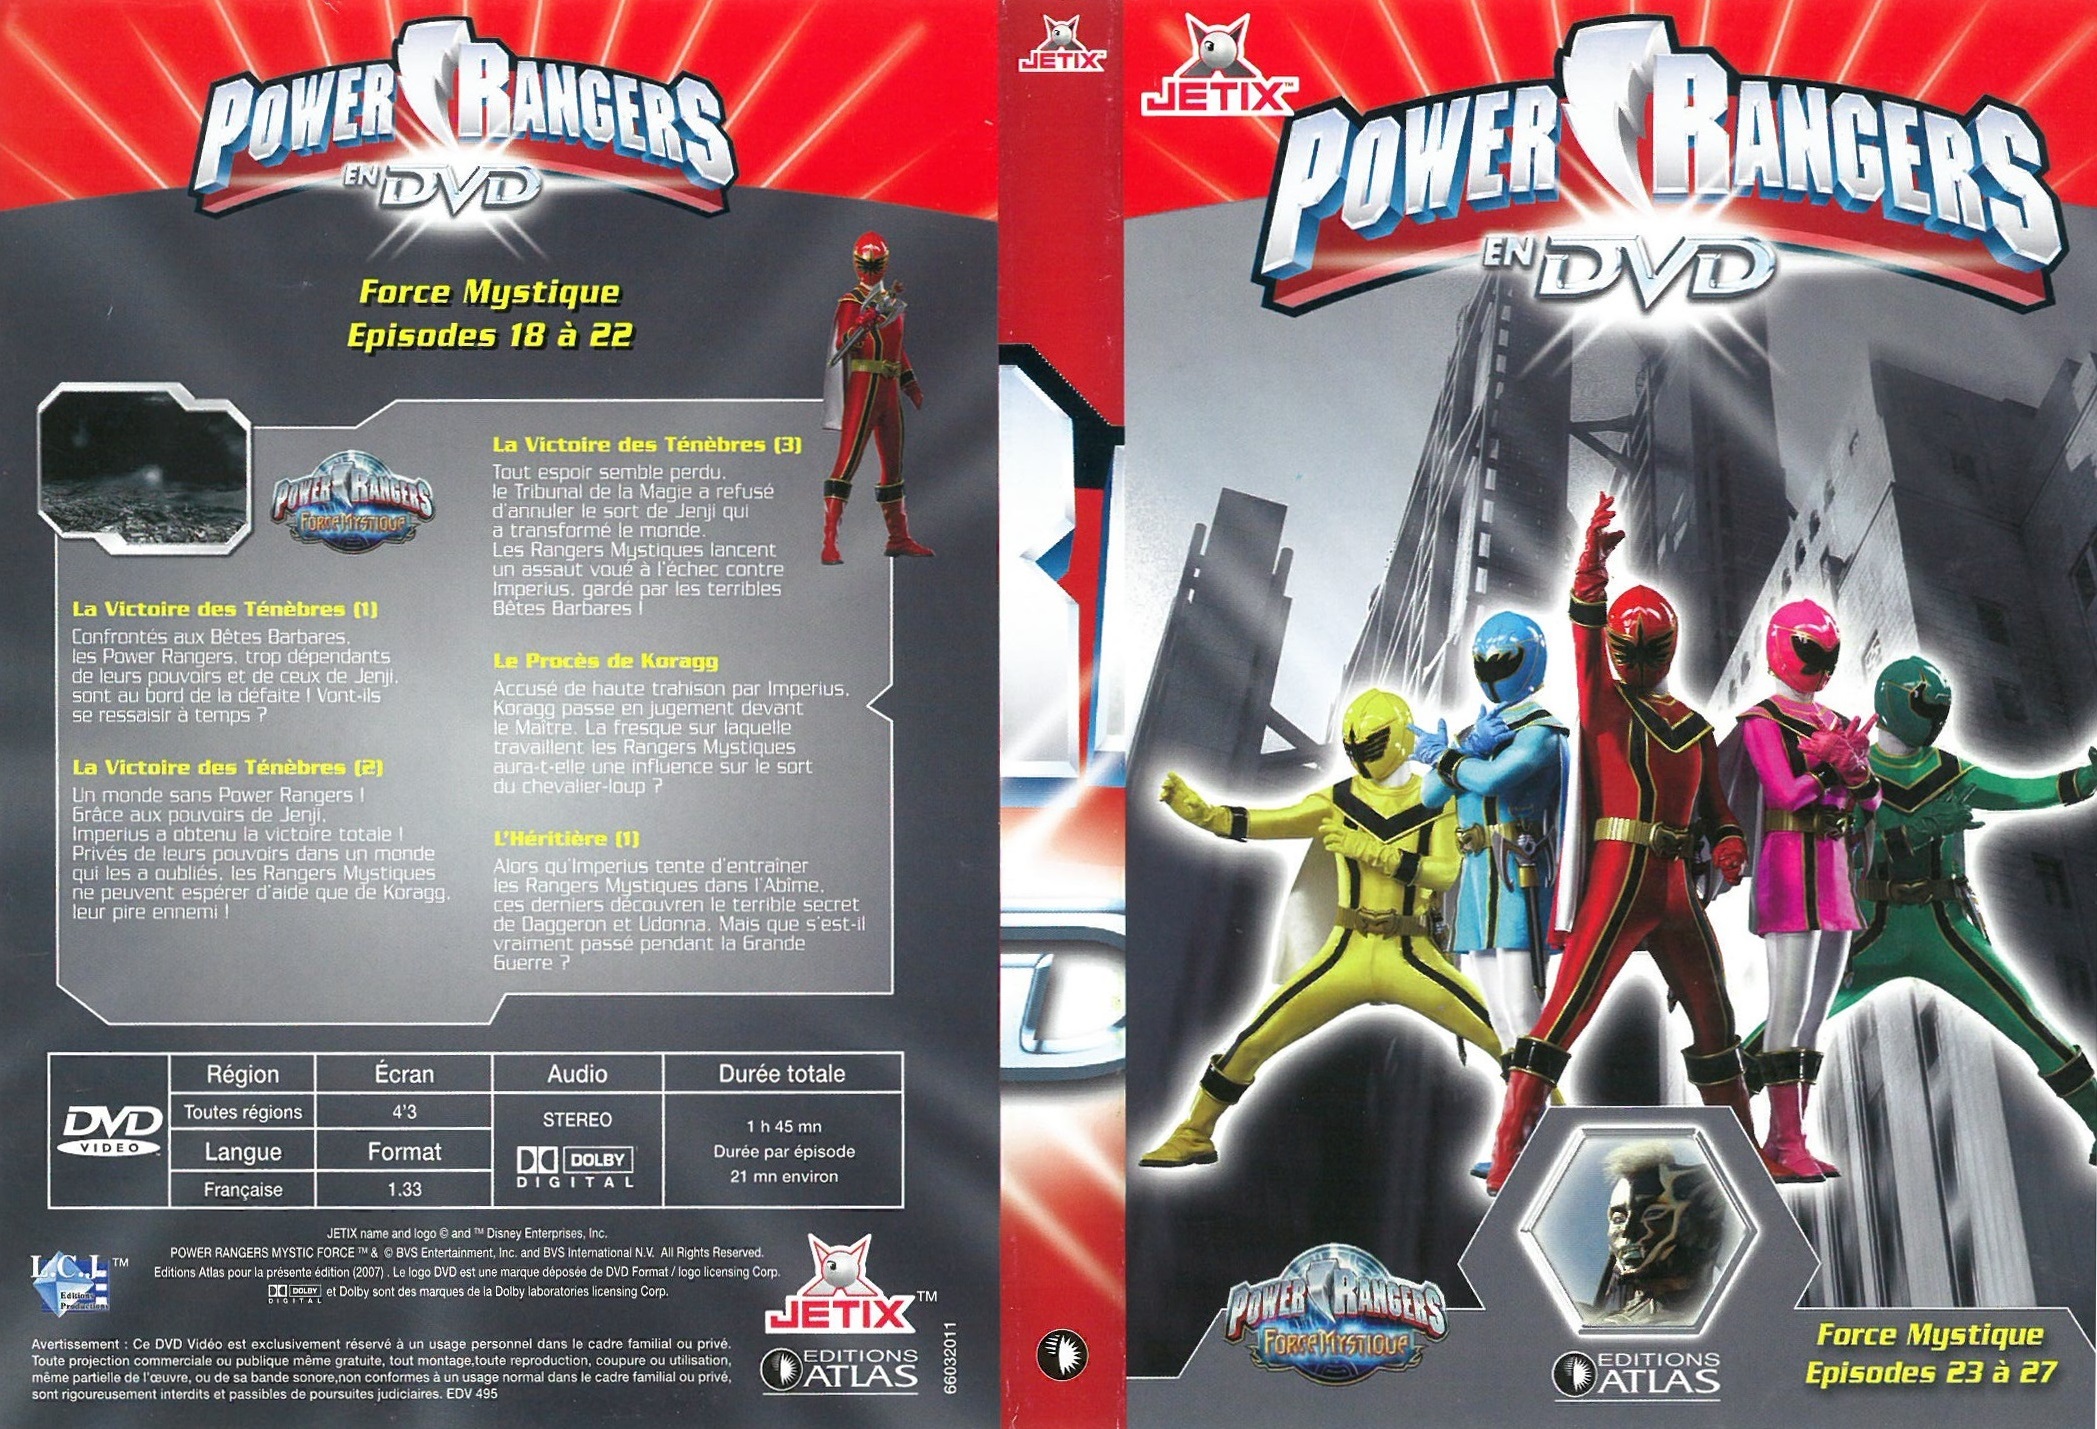 Jaquette DVD Power rangers DVD 6 (Ed Atlas)